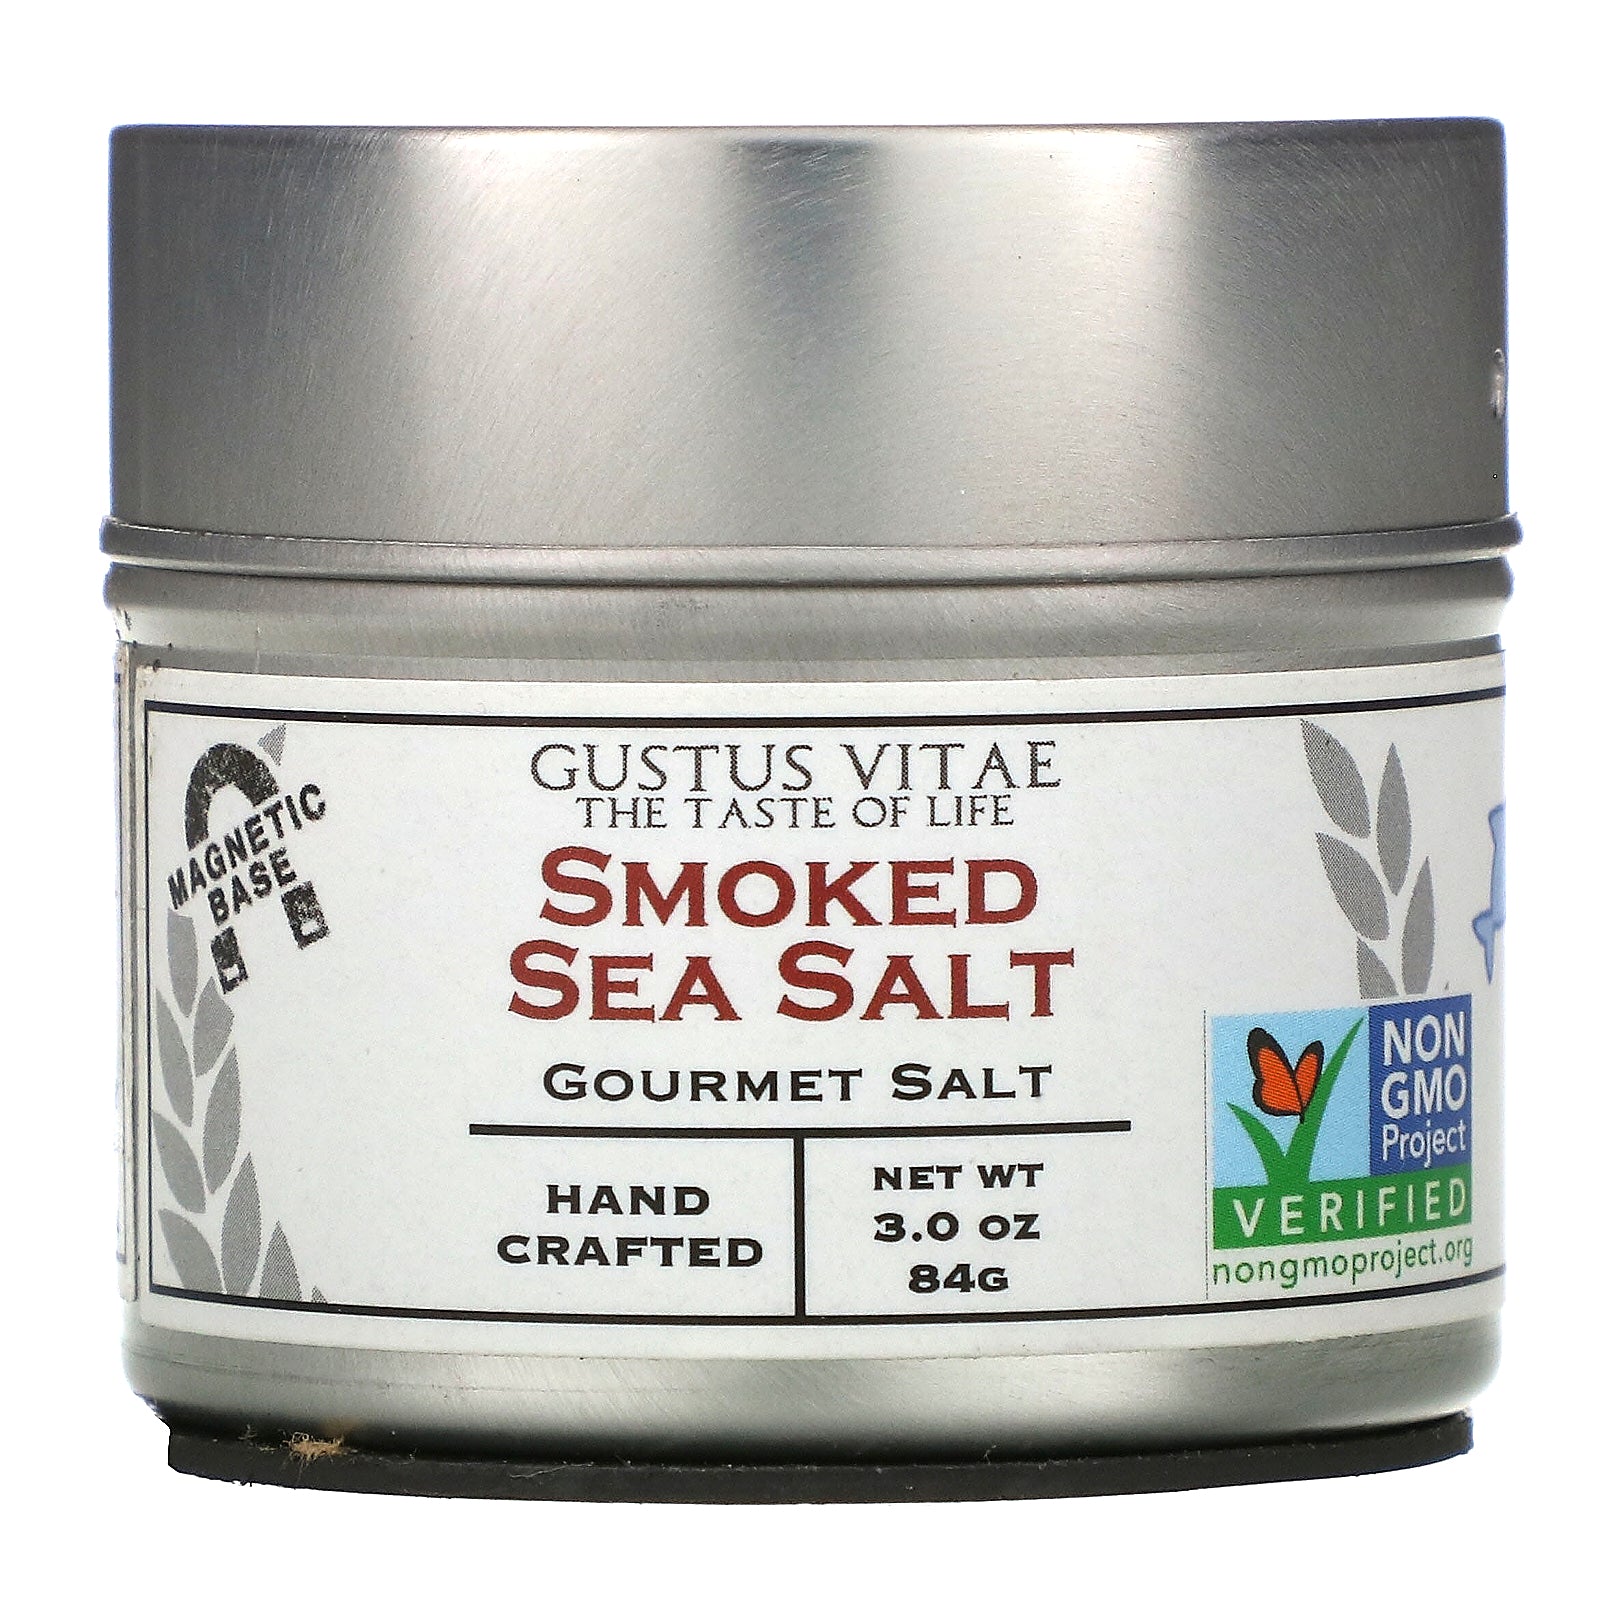 Gustus Vitae, Gourmet Salt, Smoked Sea Salt, 3 oz (84 g)